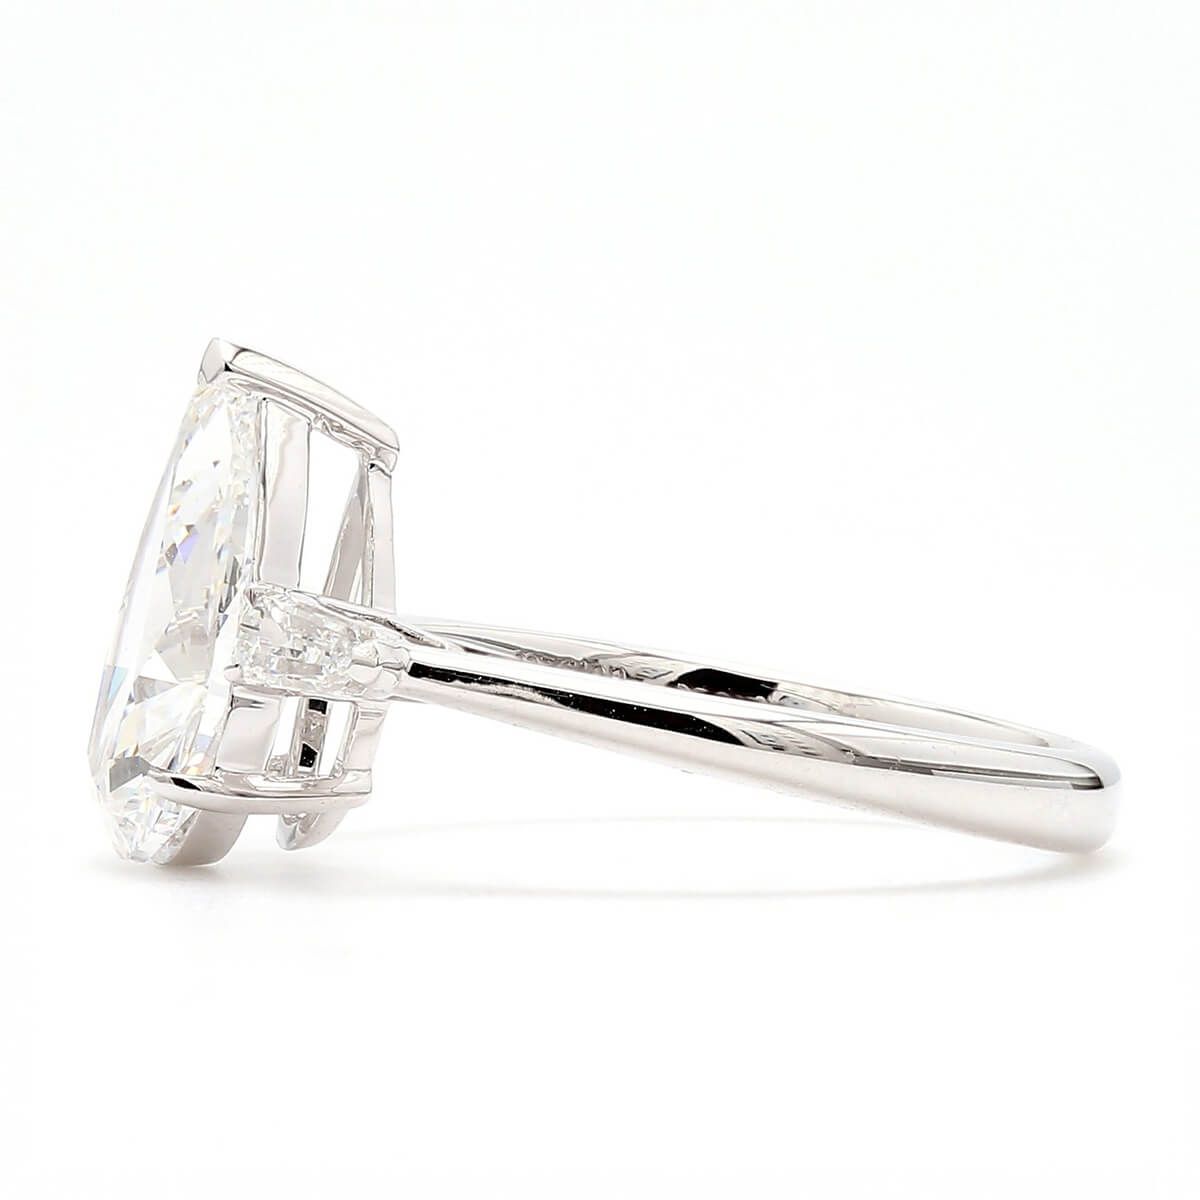  White Diamond Ring, 2.33 Ct. TW, Pear shape, GIA Certified, 6285986421